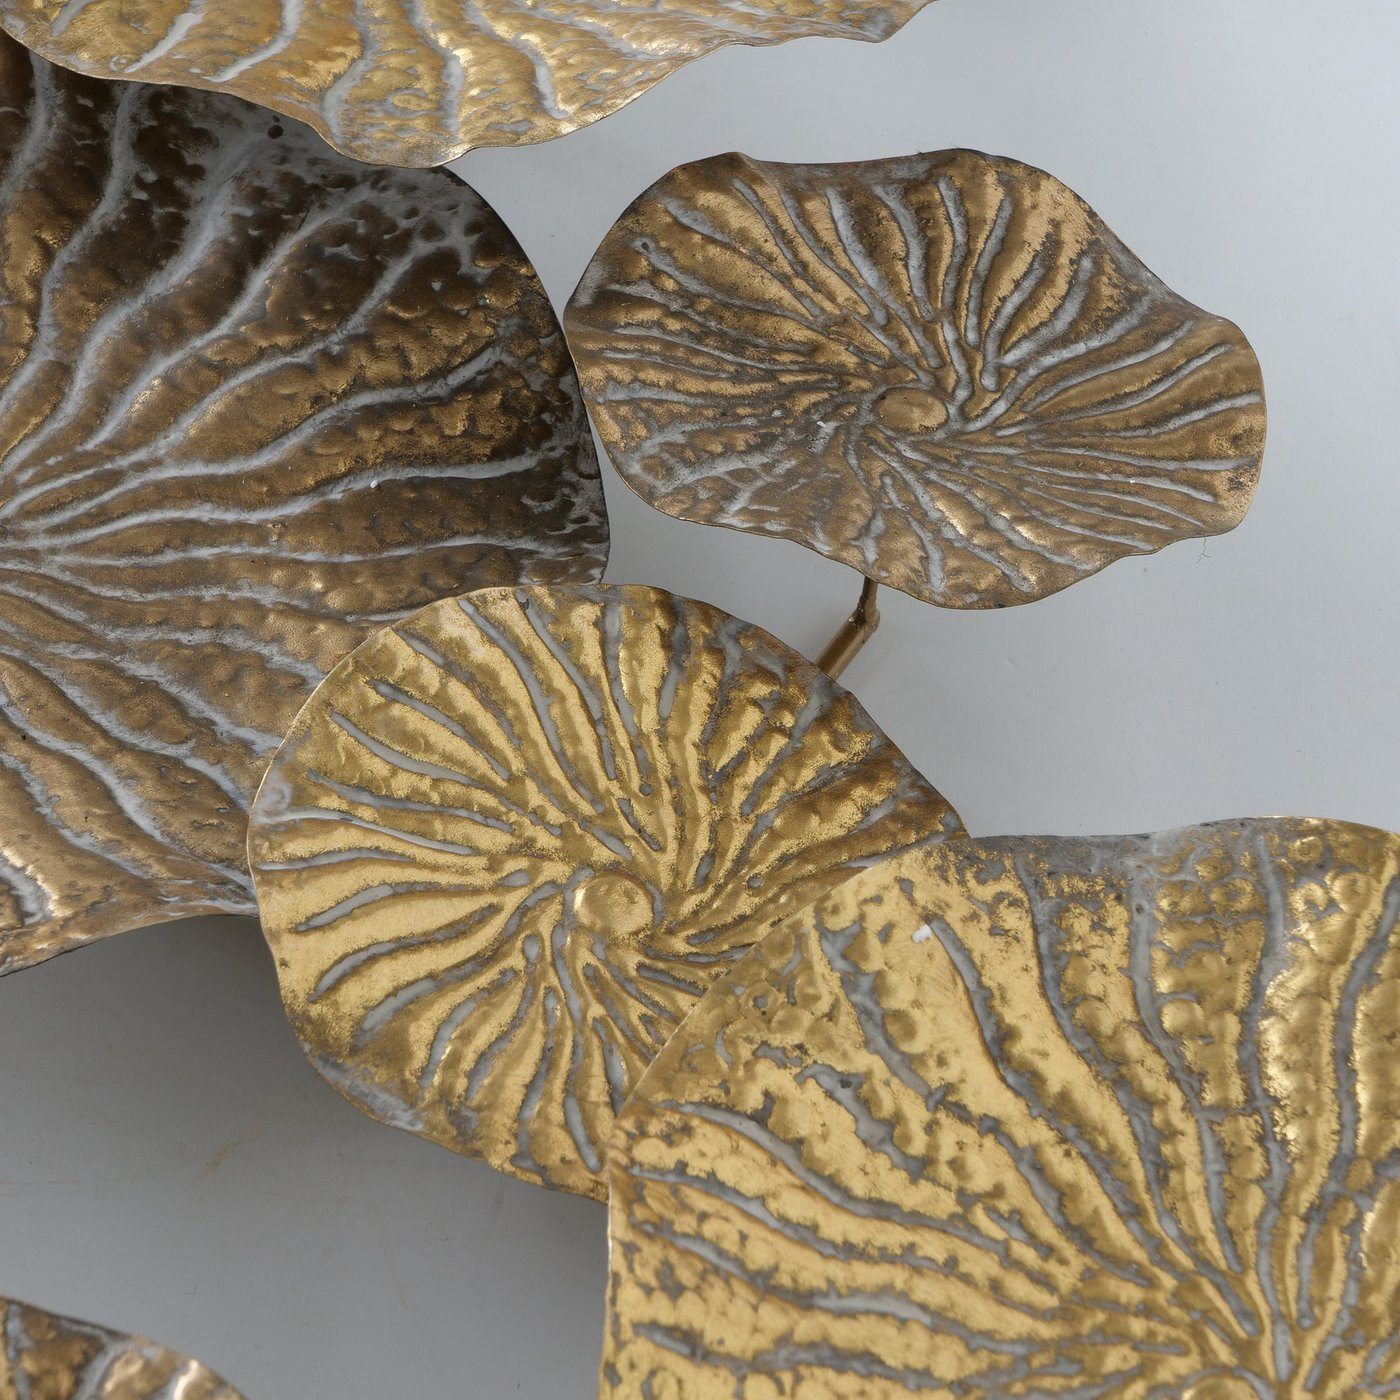 BOLTZE in (1 "Lilium" Kreise Metall Glanz St) braun/gold, aus Wanddekoobjekt